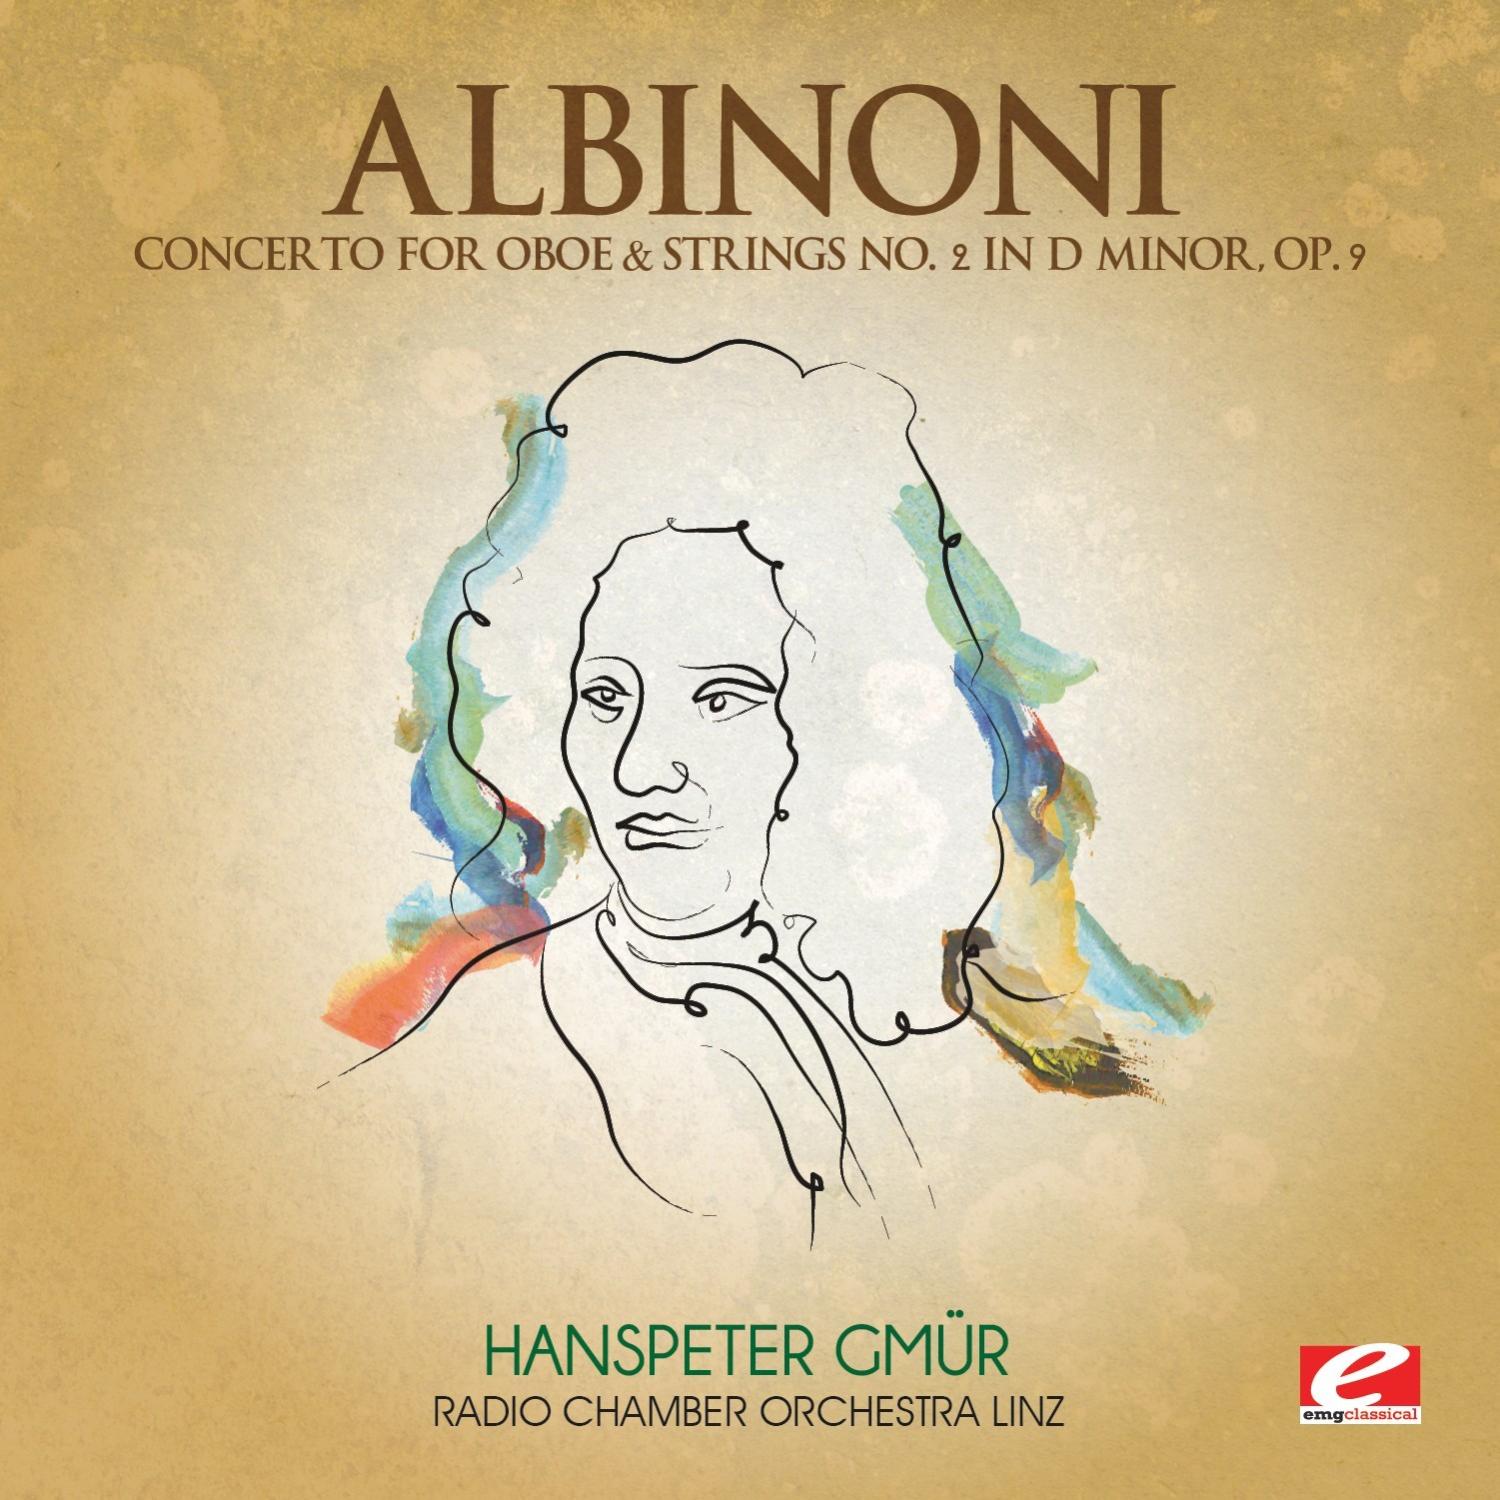 Albinoni: Concerto for Oboe & Strings No. 2 in D Minor, Op. 9 (Digitally Remastered)